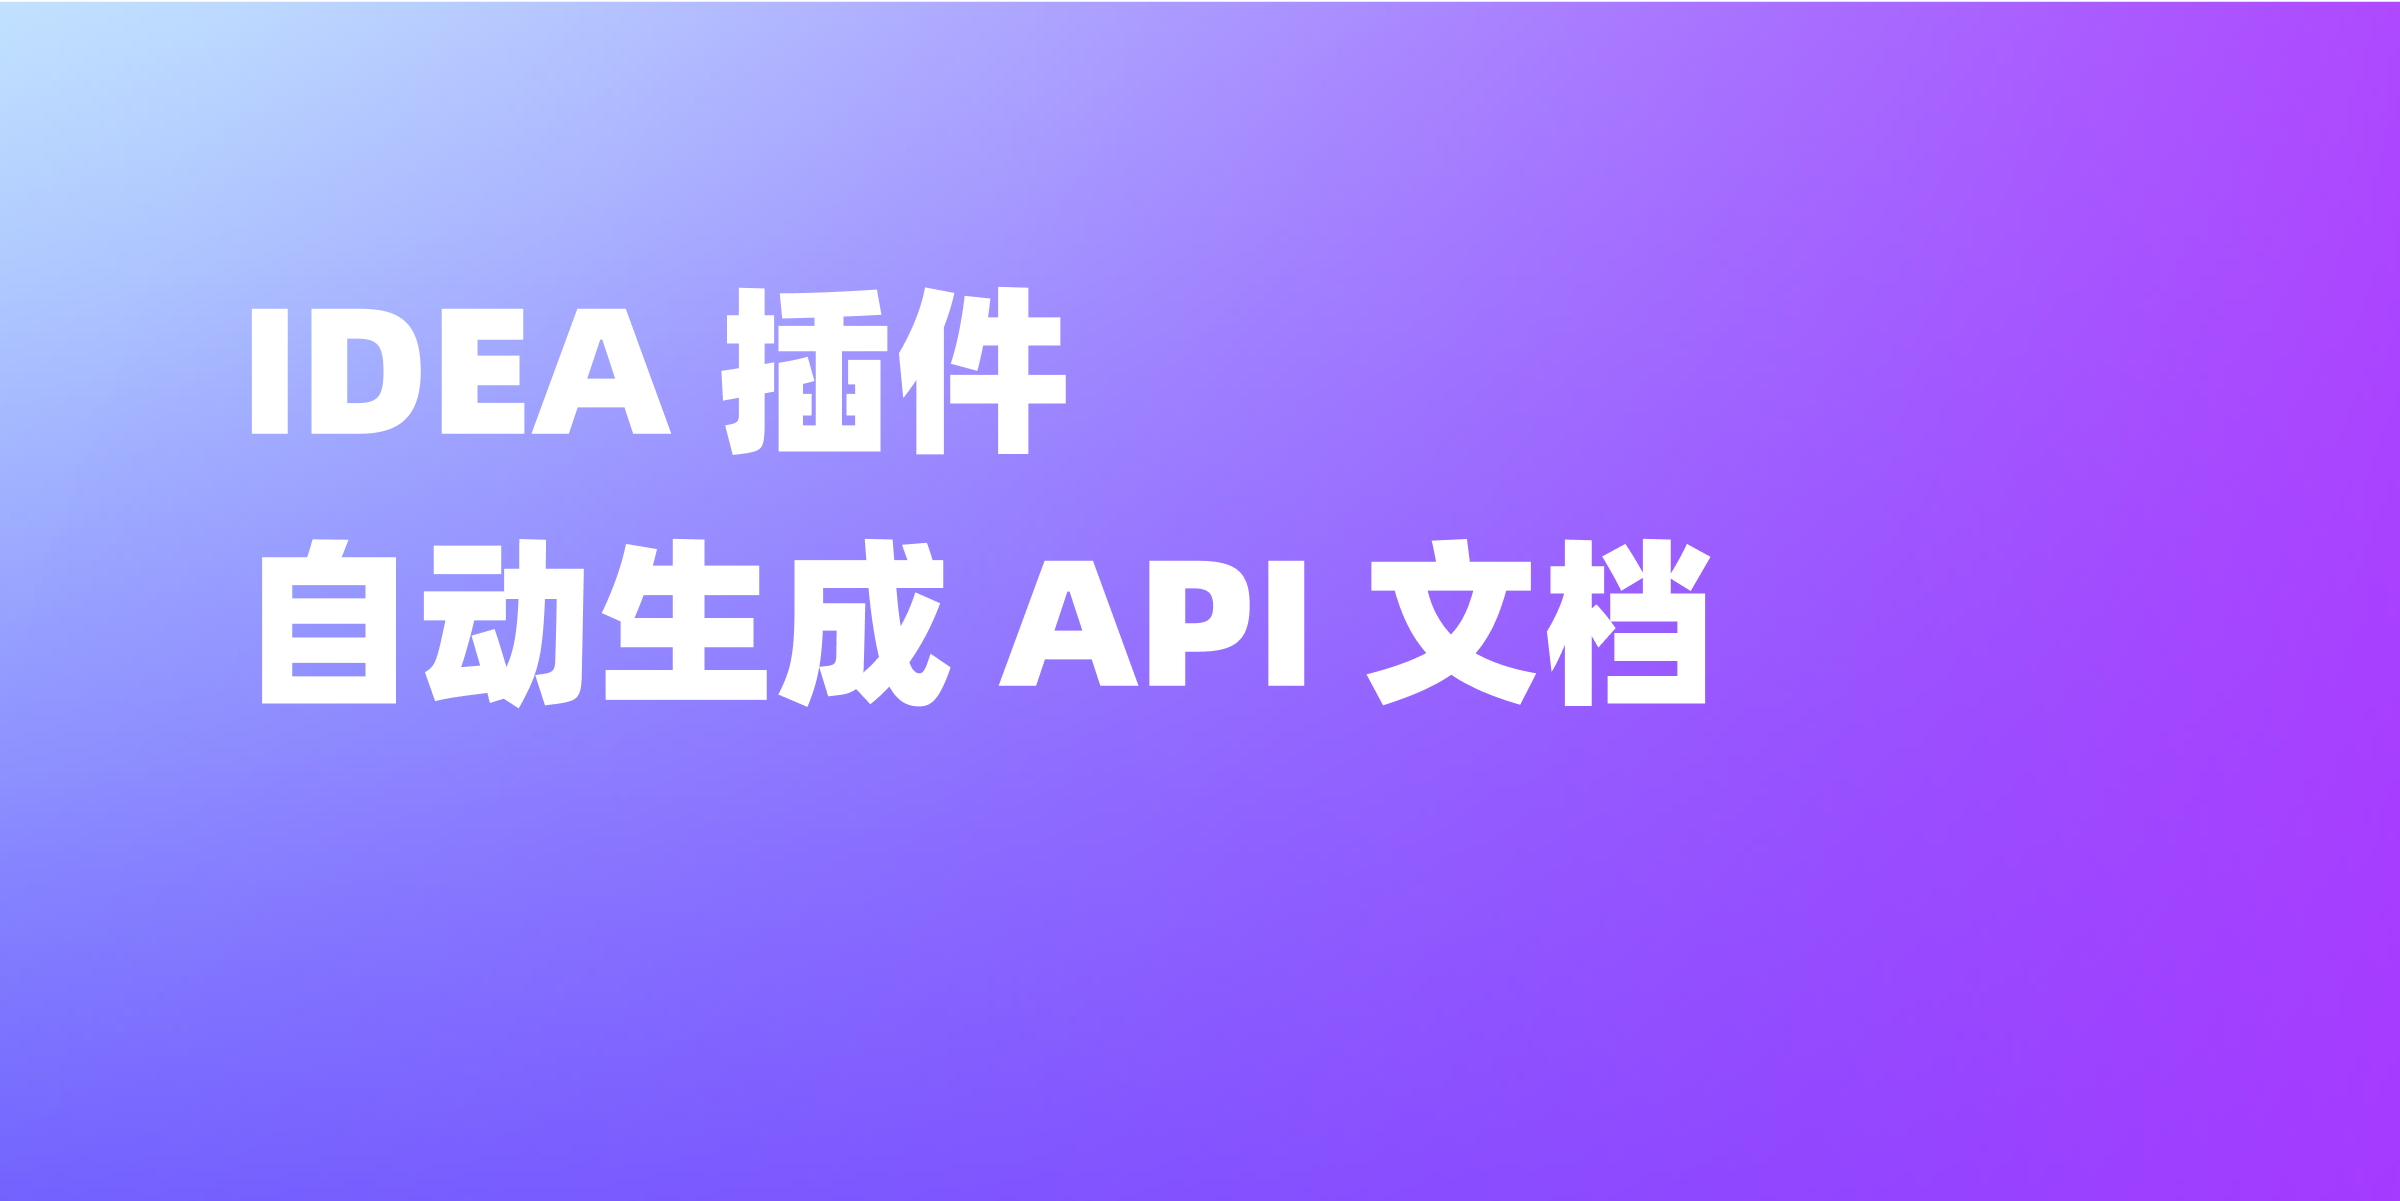 Apifox IDEA 插件 | 「Apifox Helper」帮助开发者快速生成 API 文档